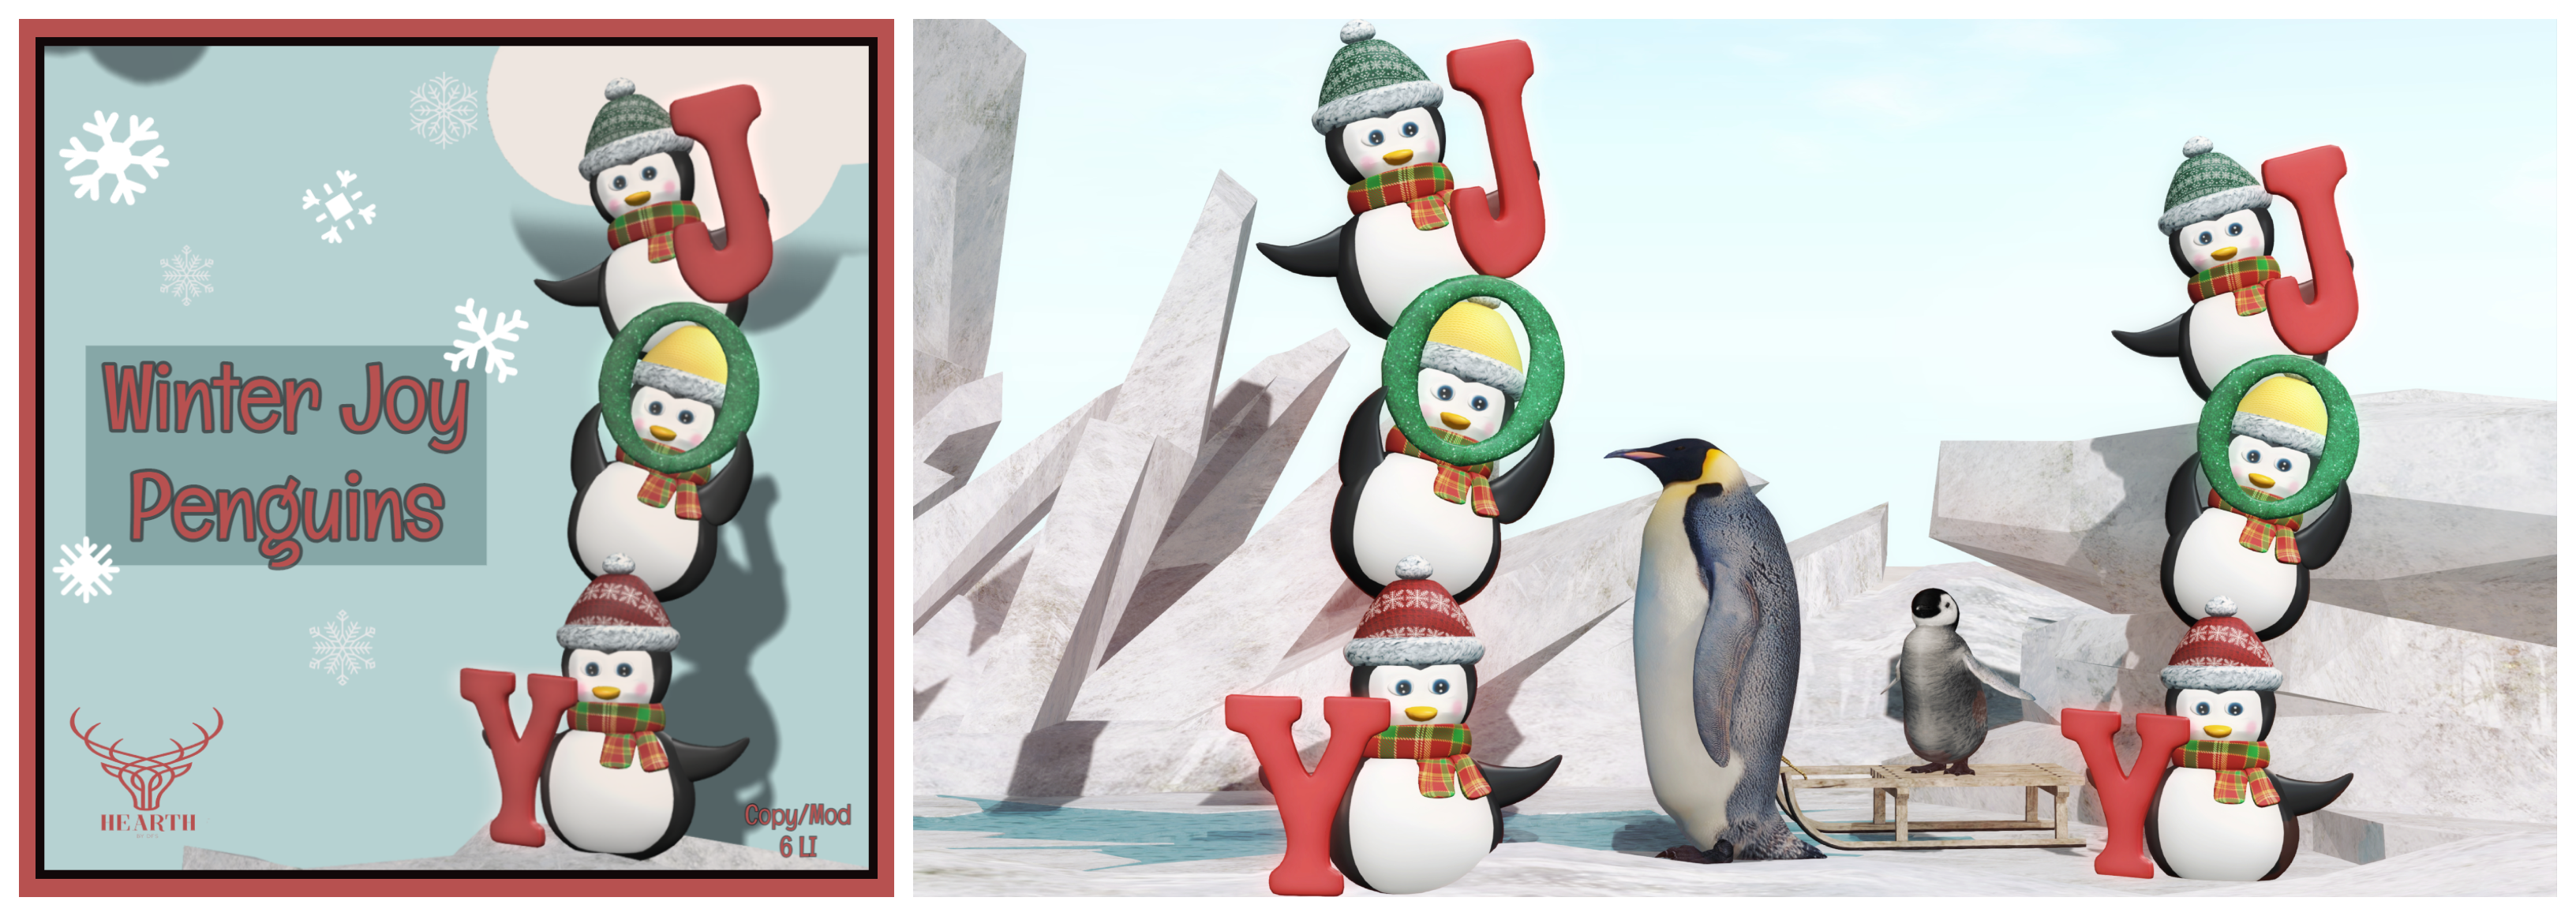 Hearth – Winter Joy Penguins